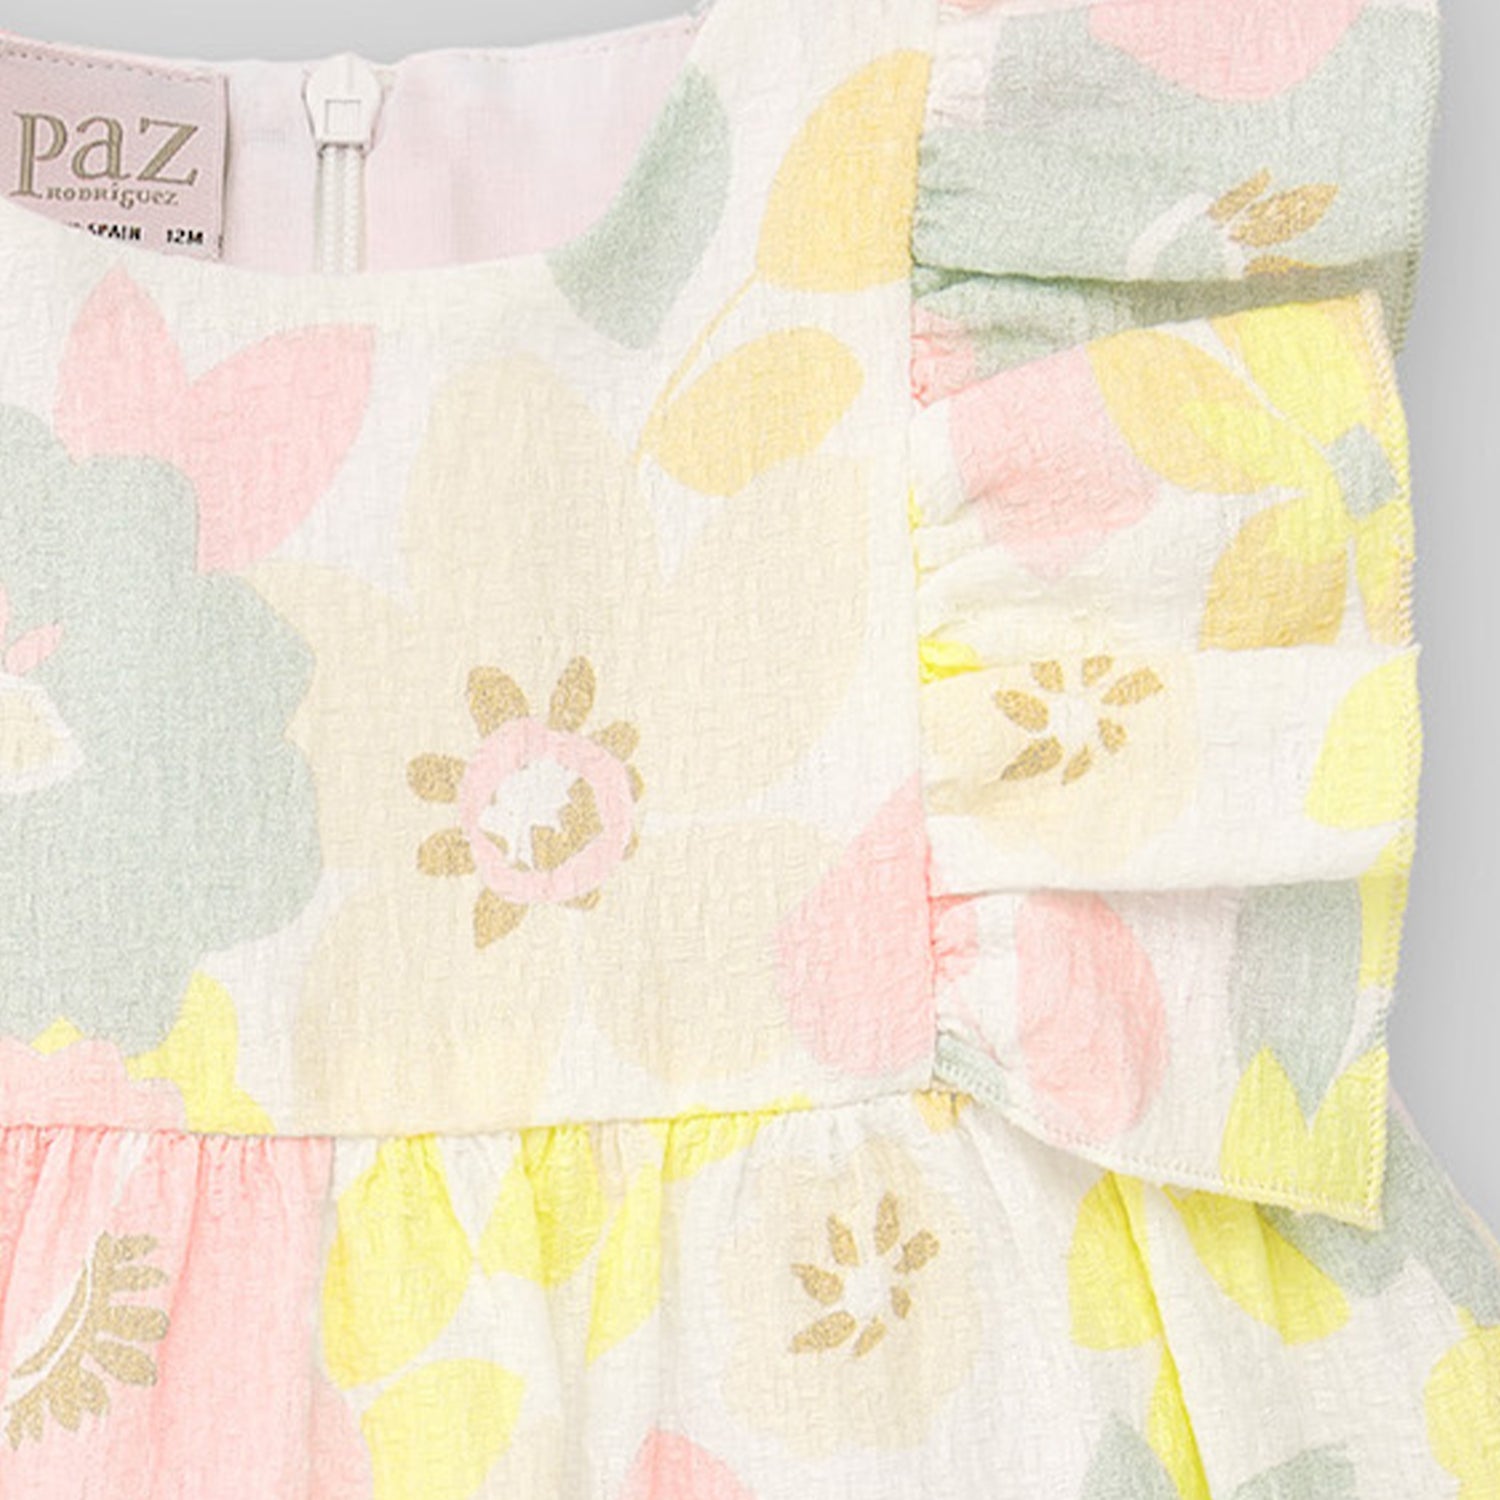 Baby Girls Pastel Floral Dress